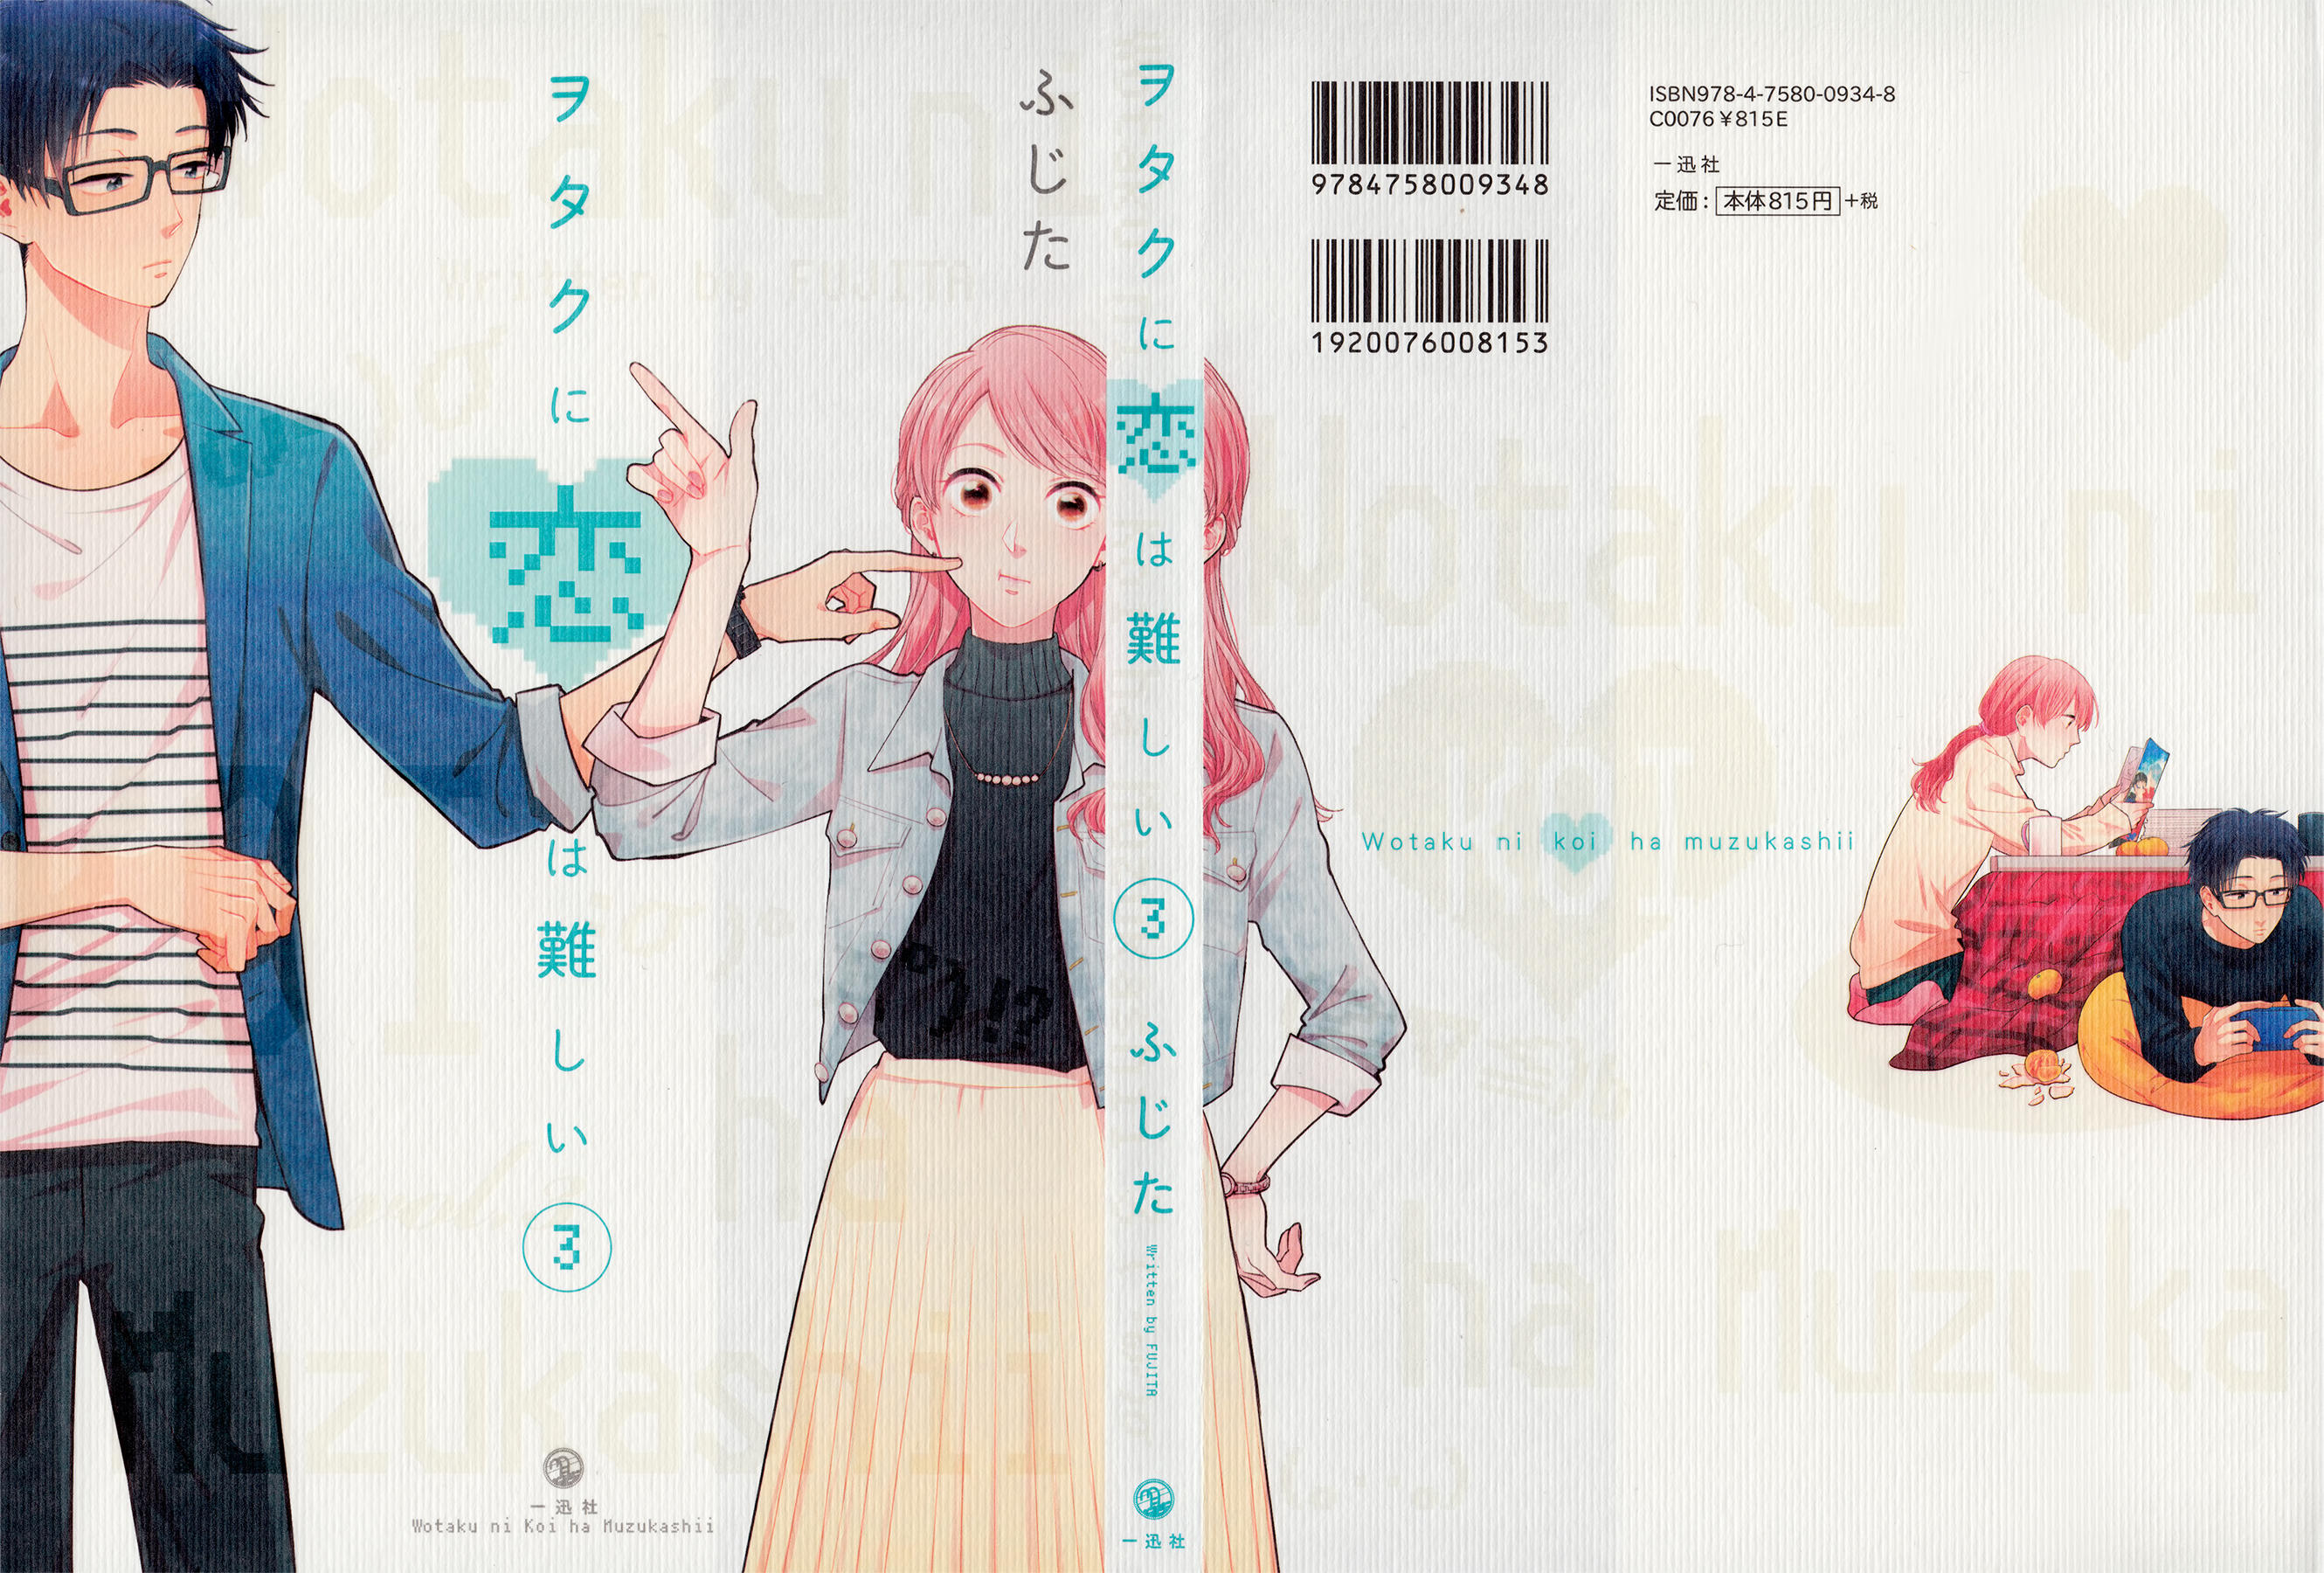 Read Wotaku Ni Koi Wa Muzukashii Chapter 14 V2 : Episode 14 - Date 1 -  Manganelo